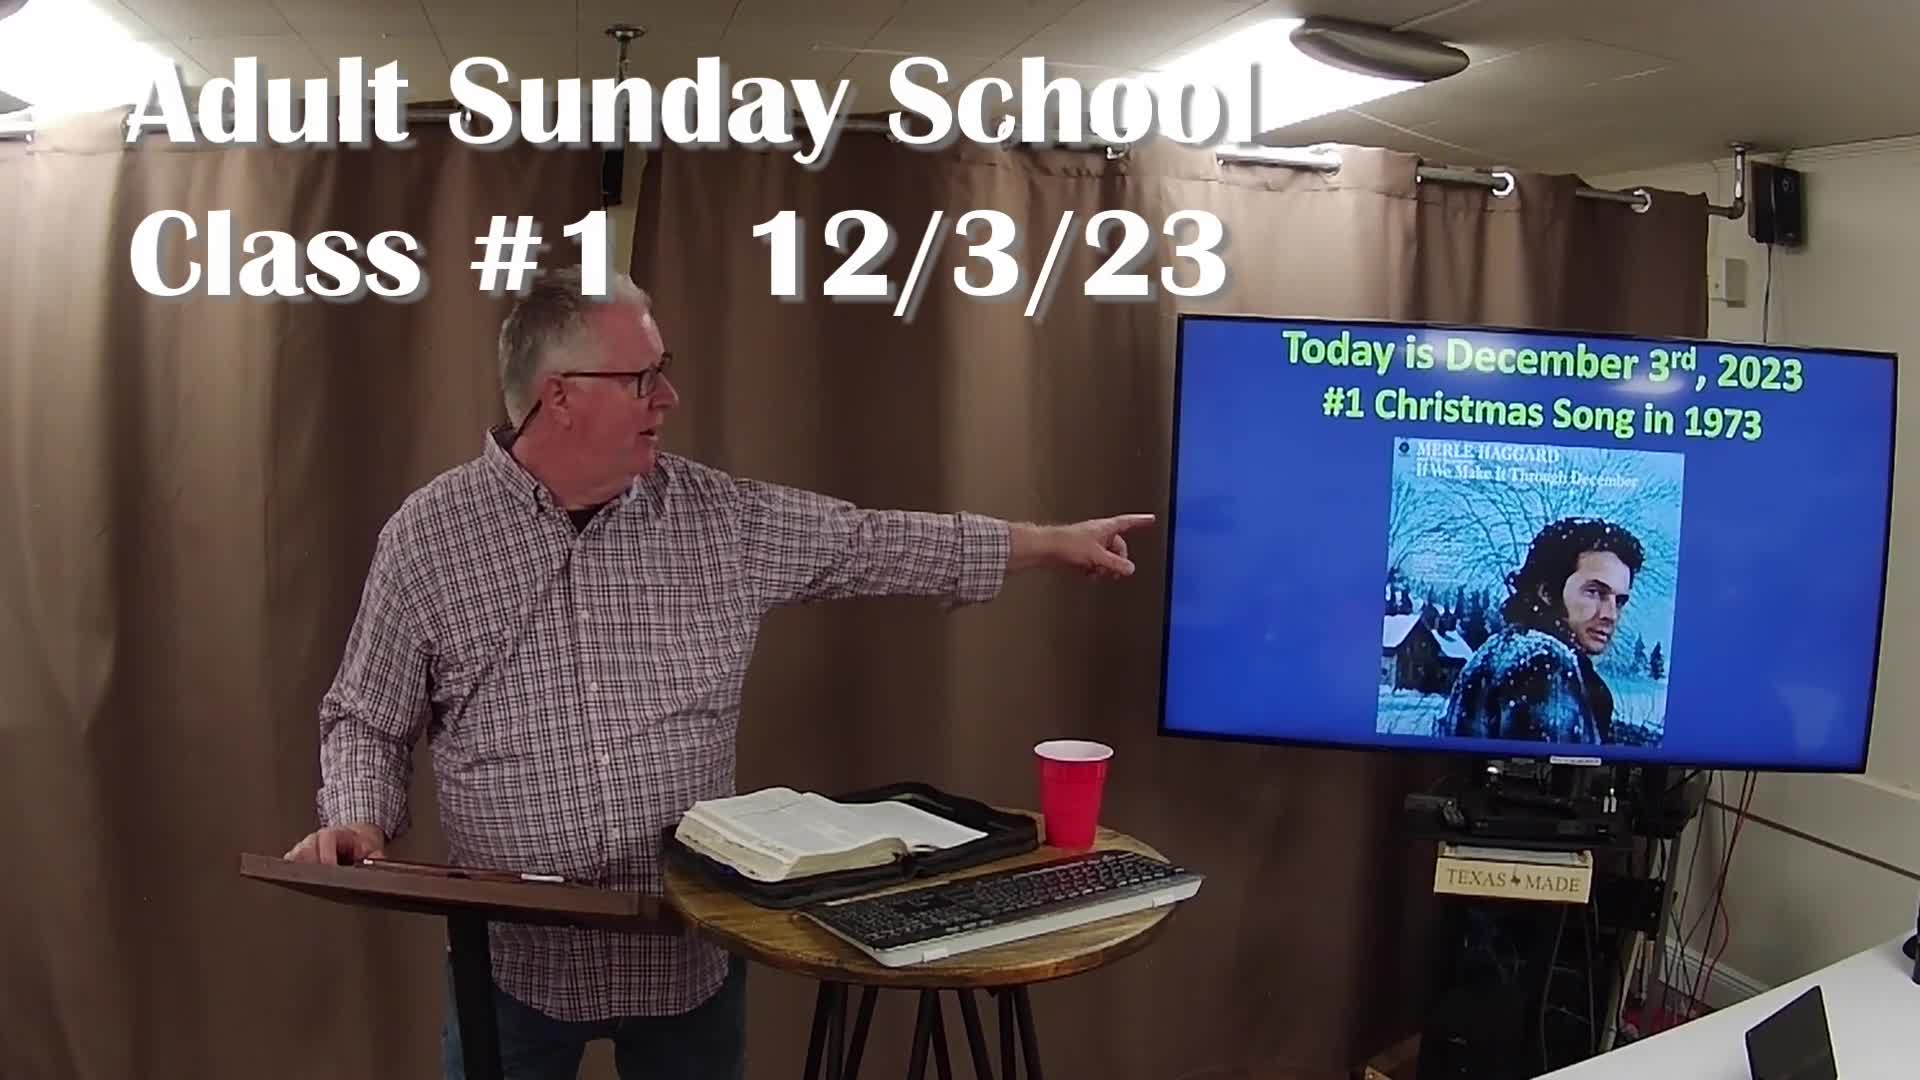 Adult Sunday School 1